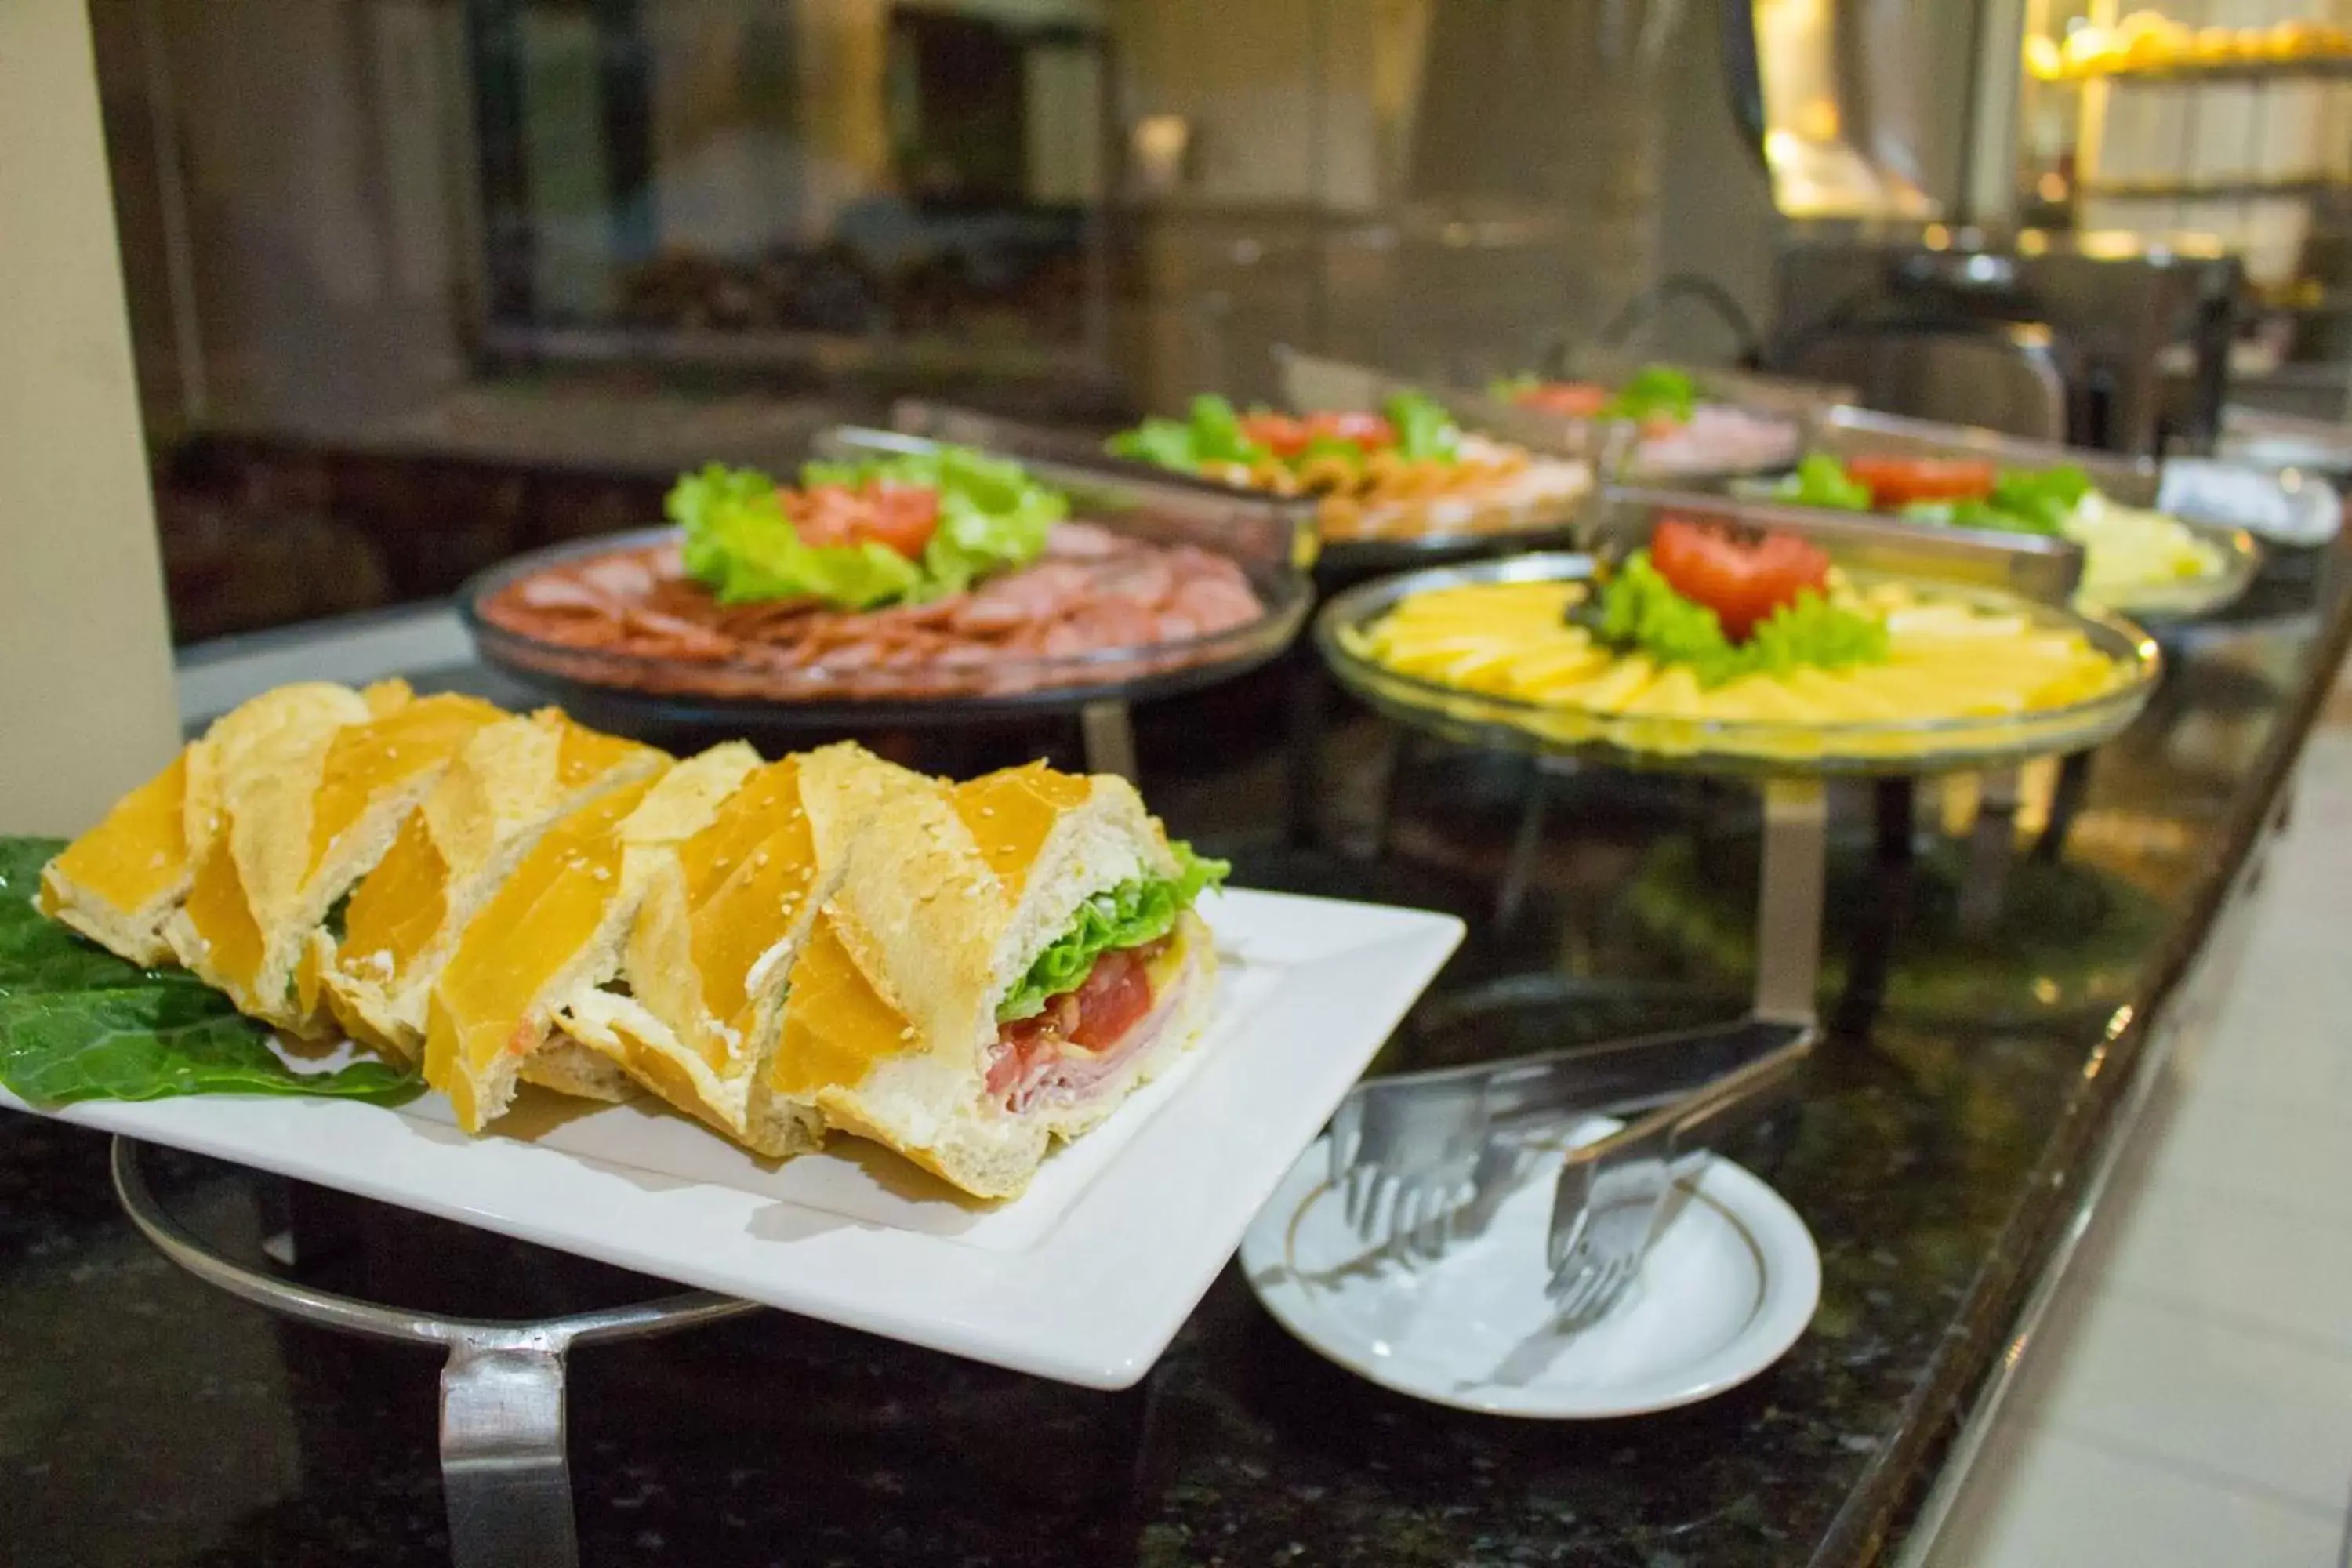 Buffet breakfast in Hotel Estação 101 - Brusque